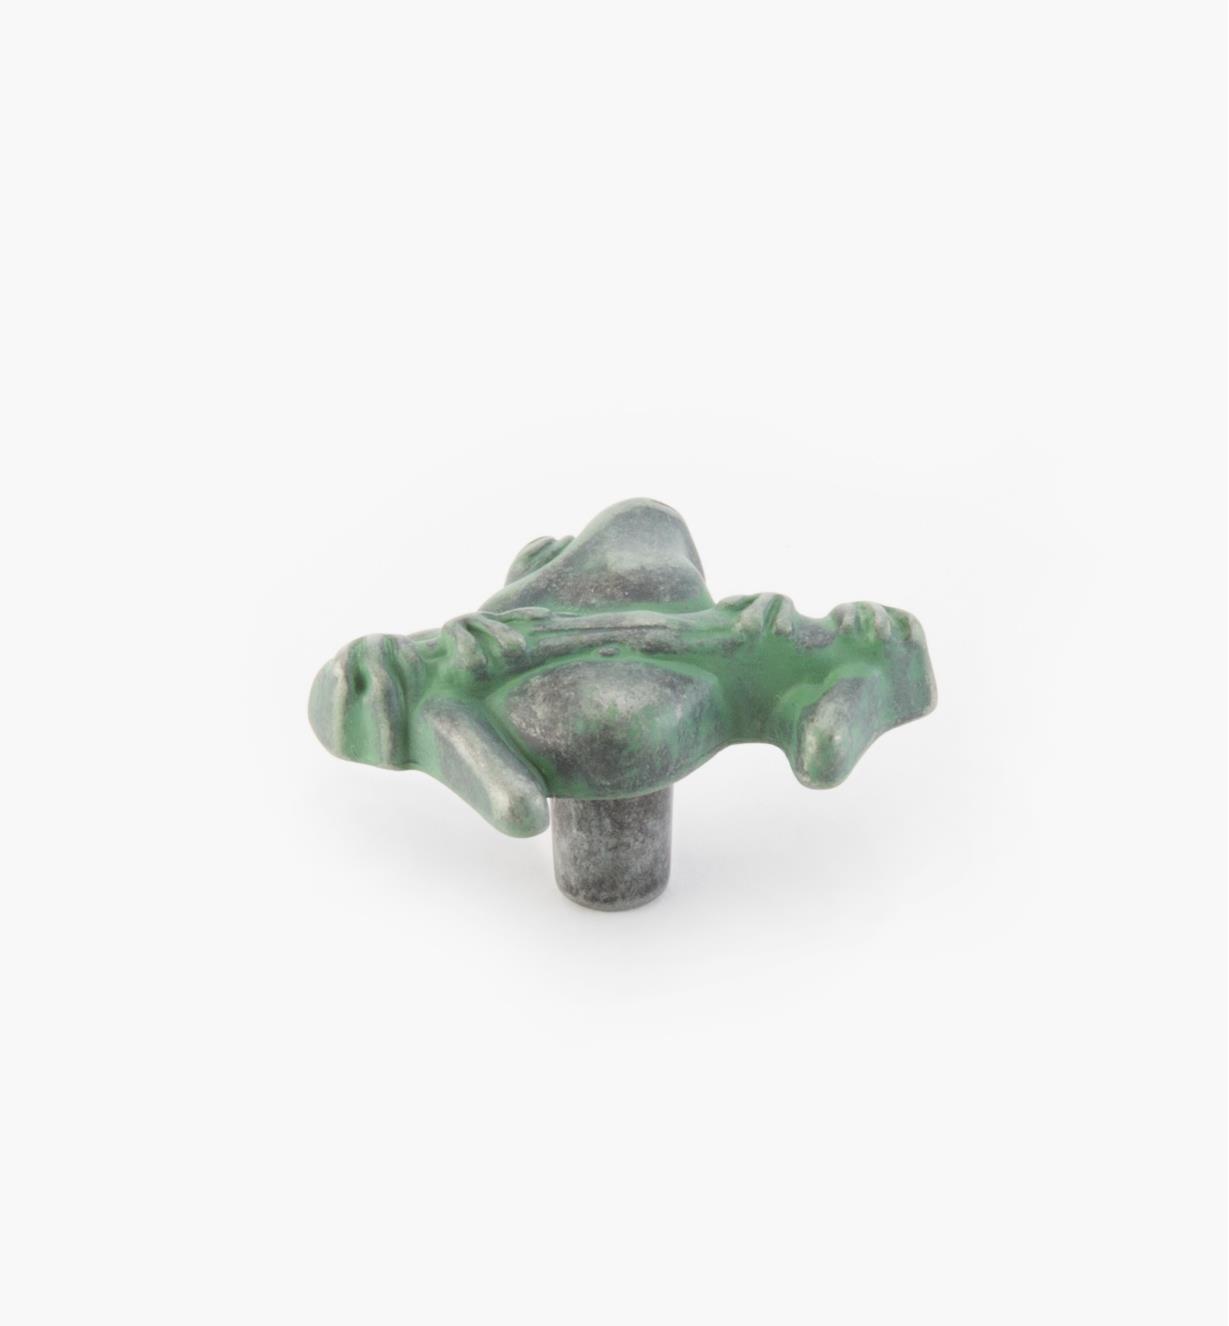 03W2816 - Whimsical 1 5/8" Verde Gris Frog Knob, each